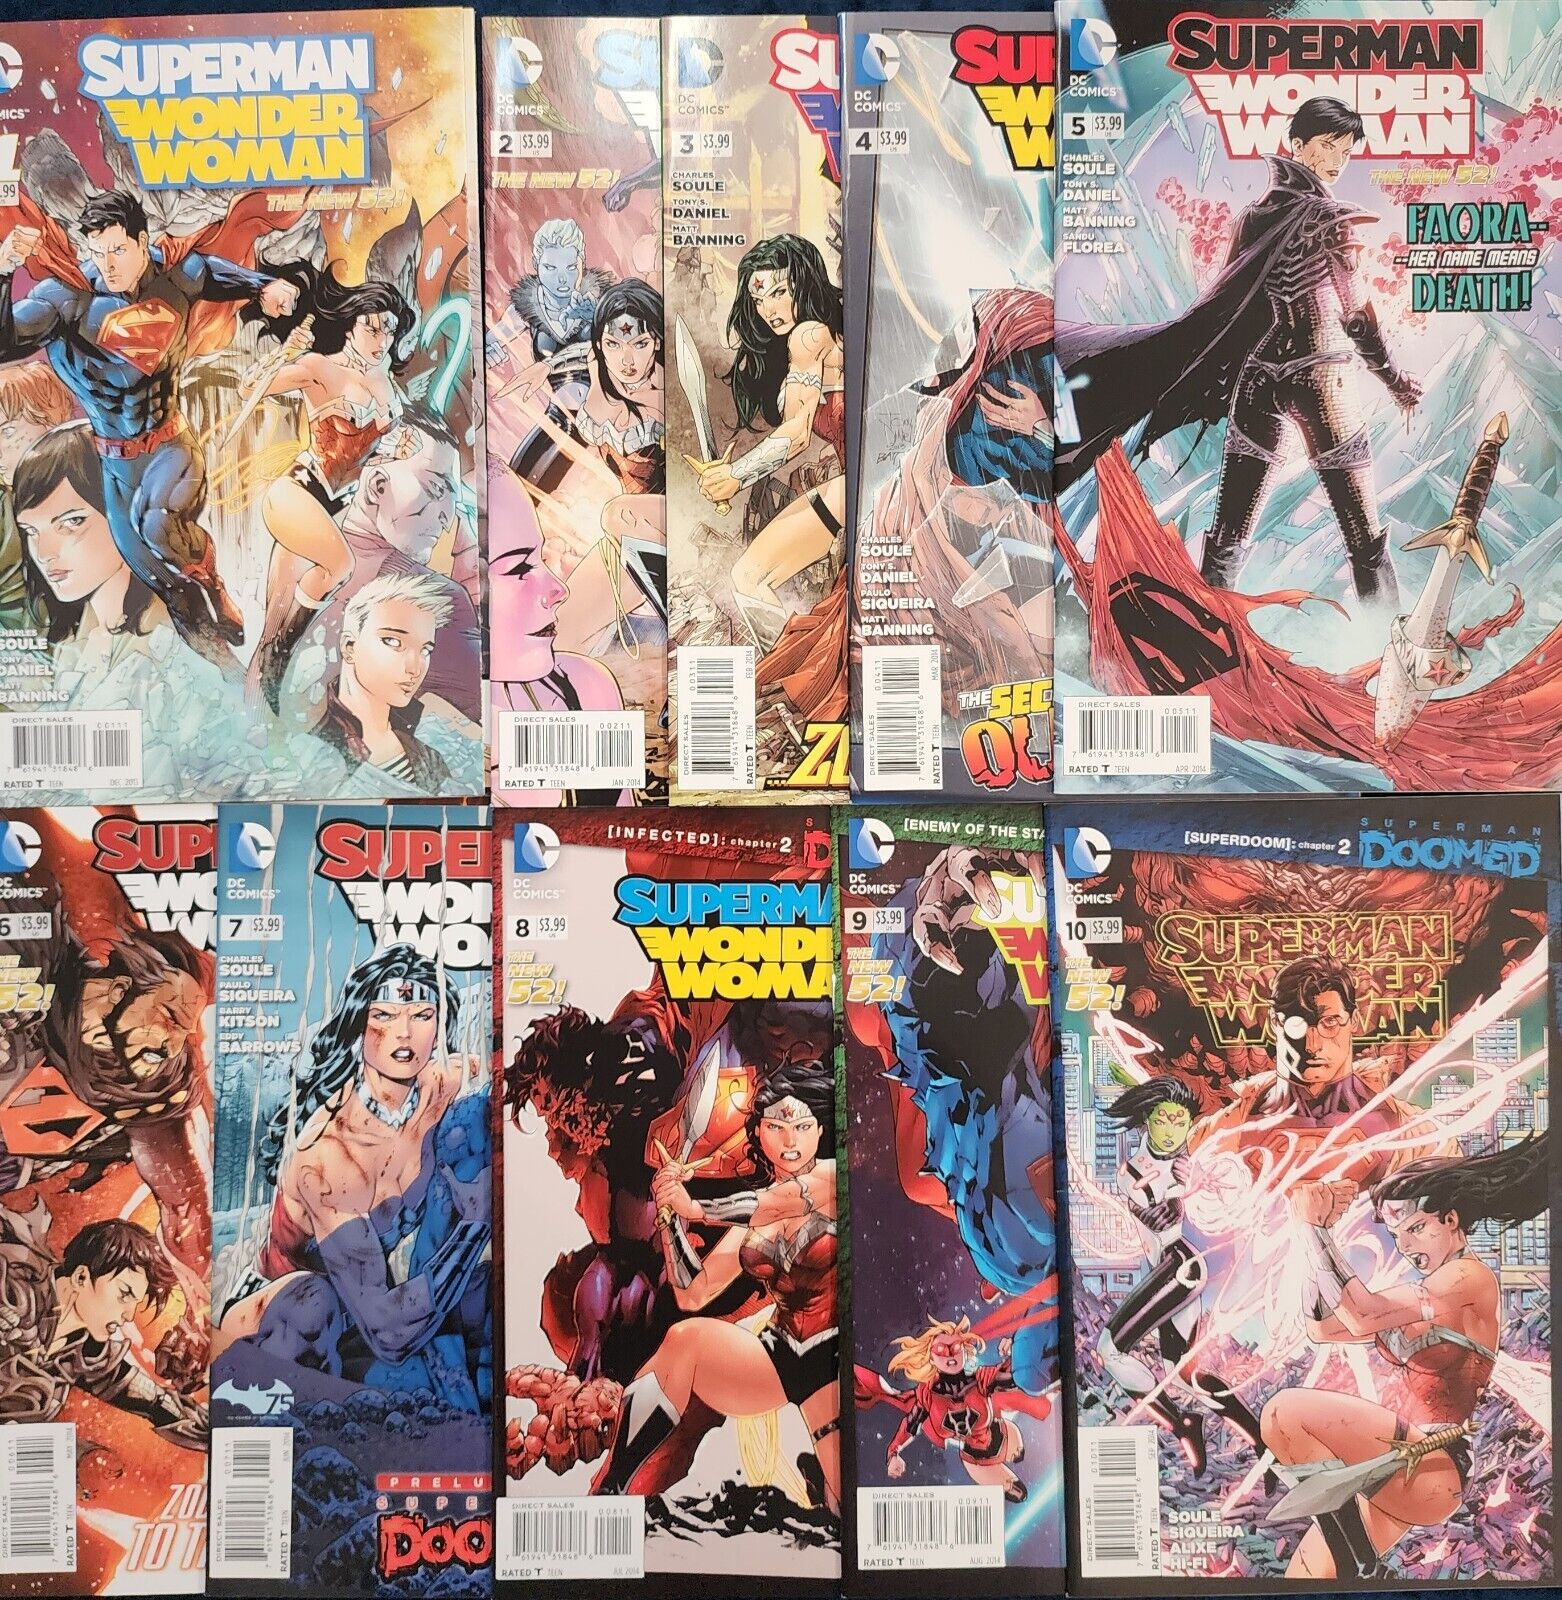 Superman/Wonder Woman #1-10 New 52 DC Comic Book Set/Lot FAORA Key 2013 Doomed